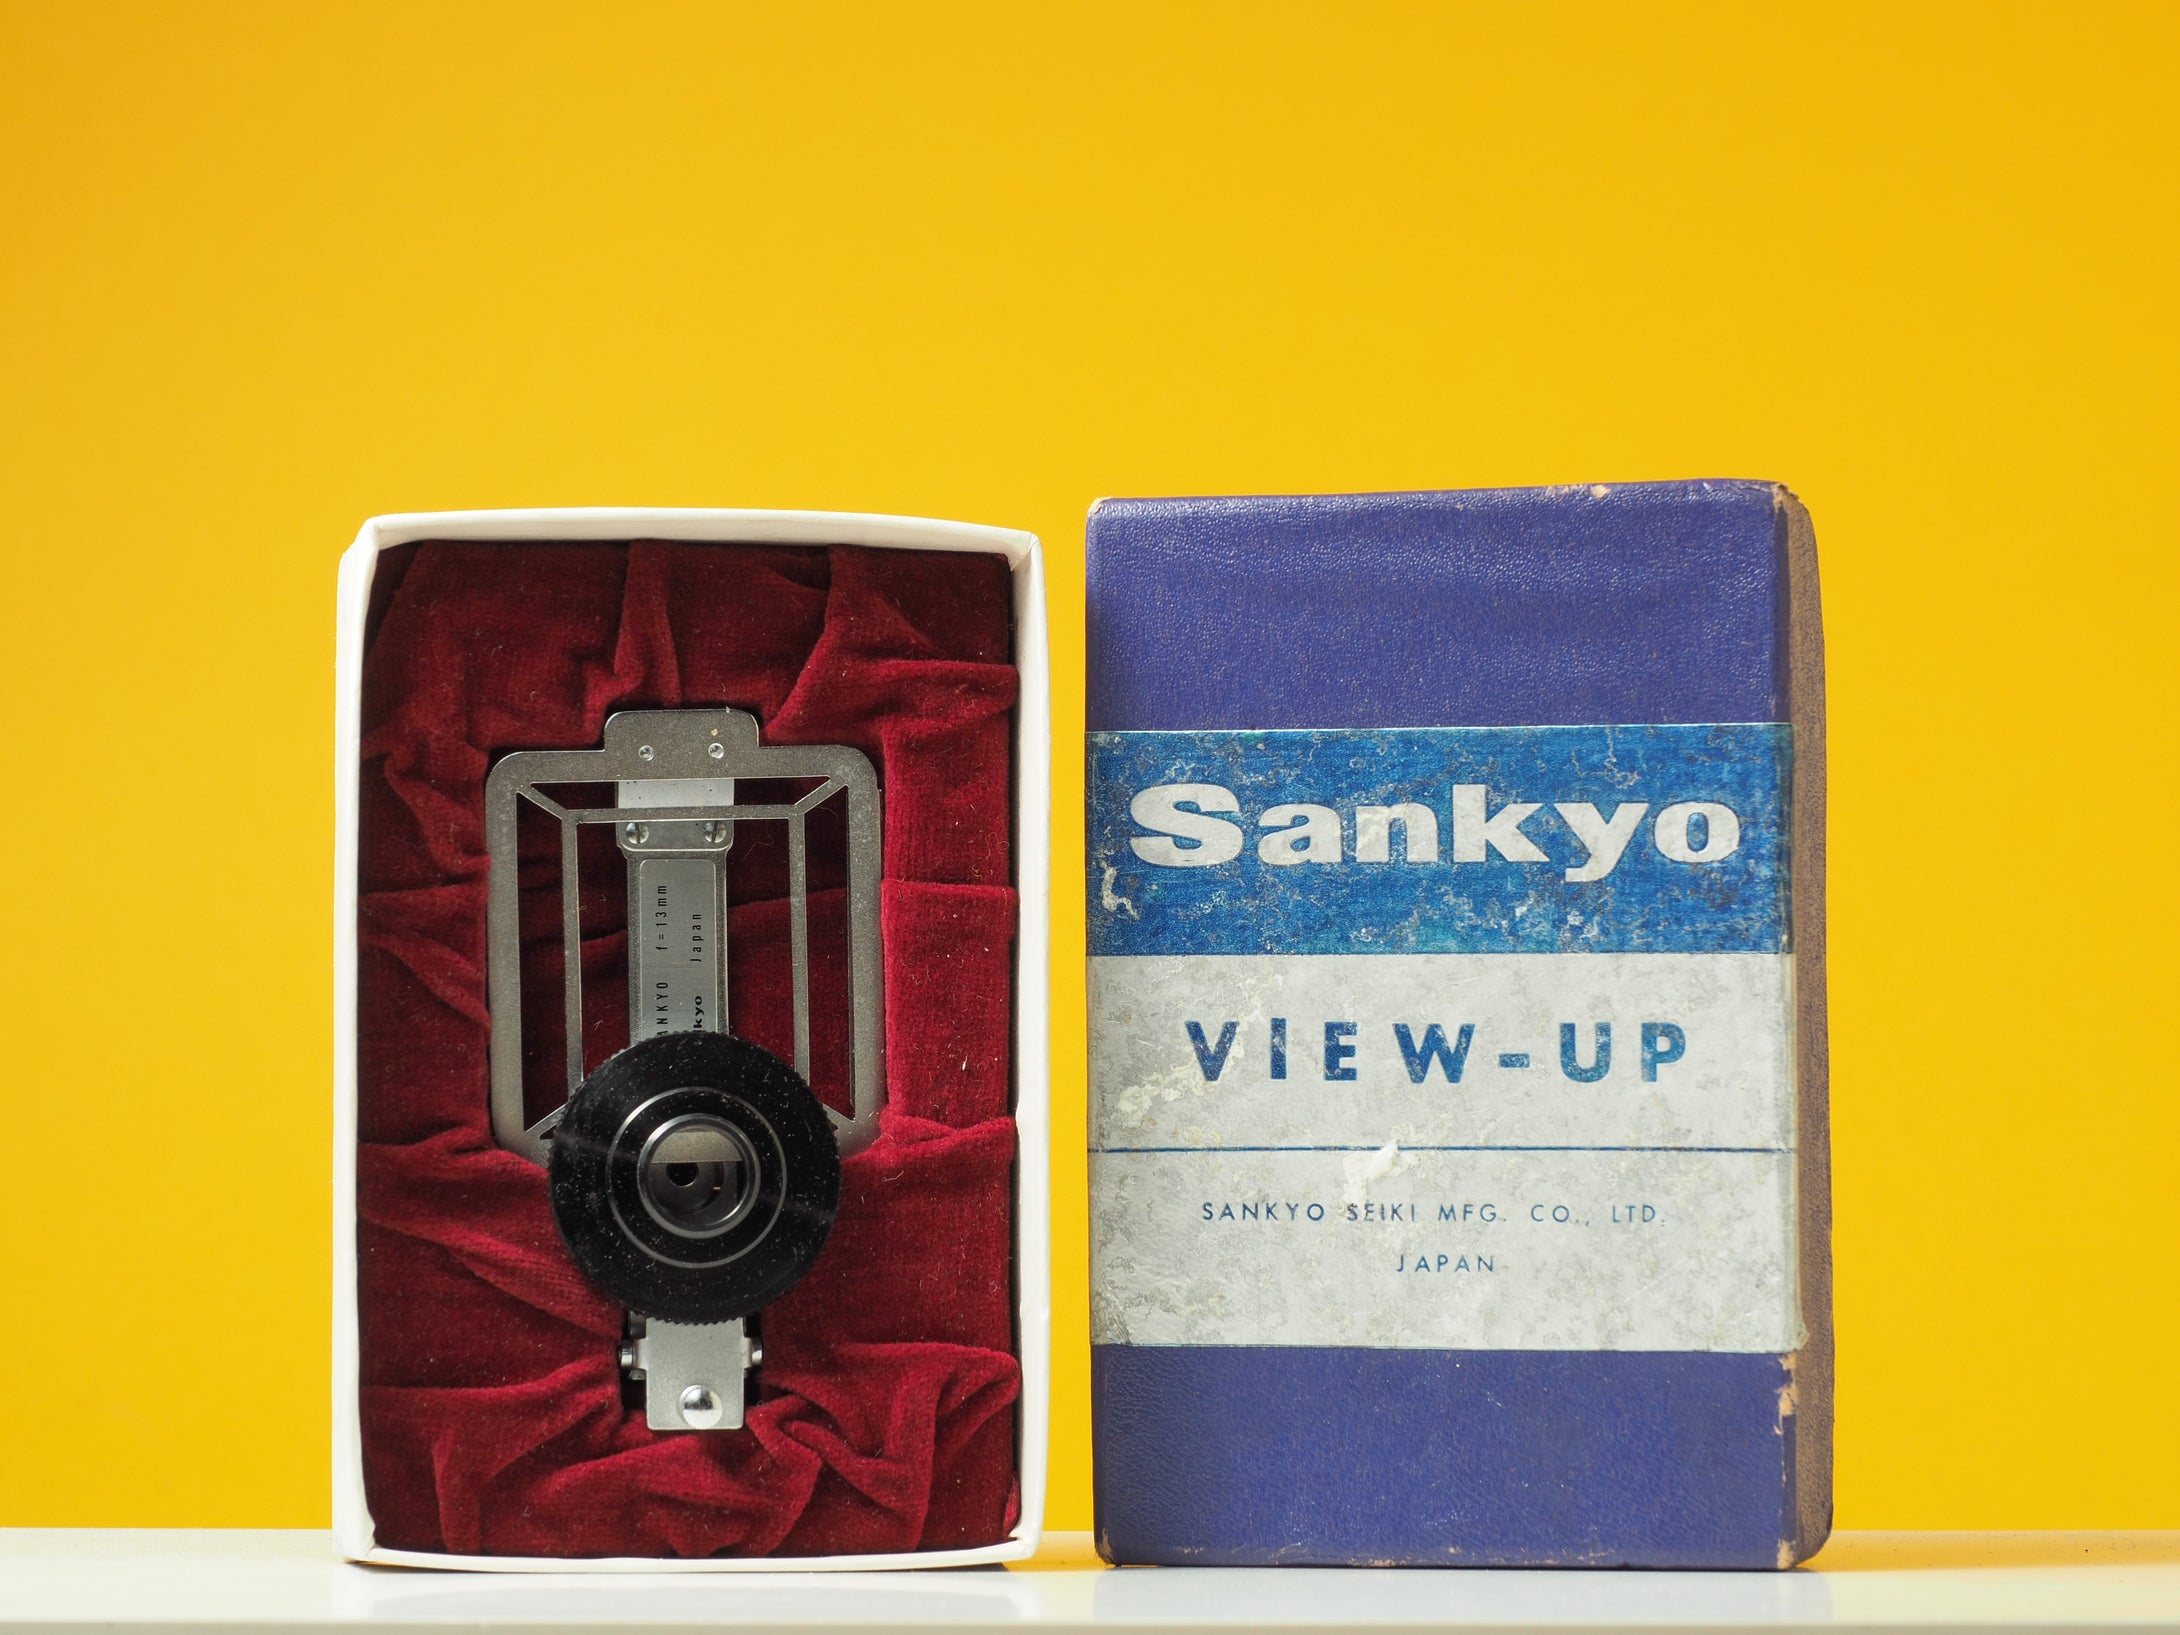 Sankyo View-up Boxed